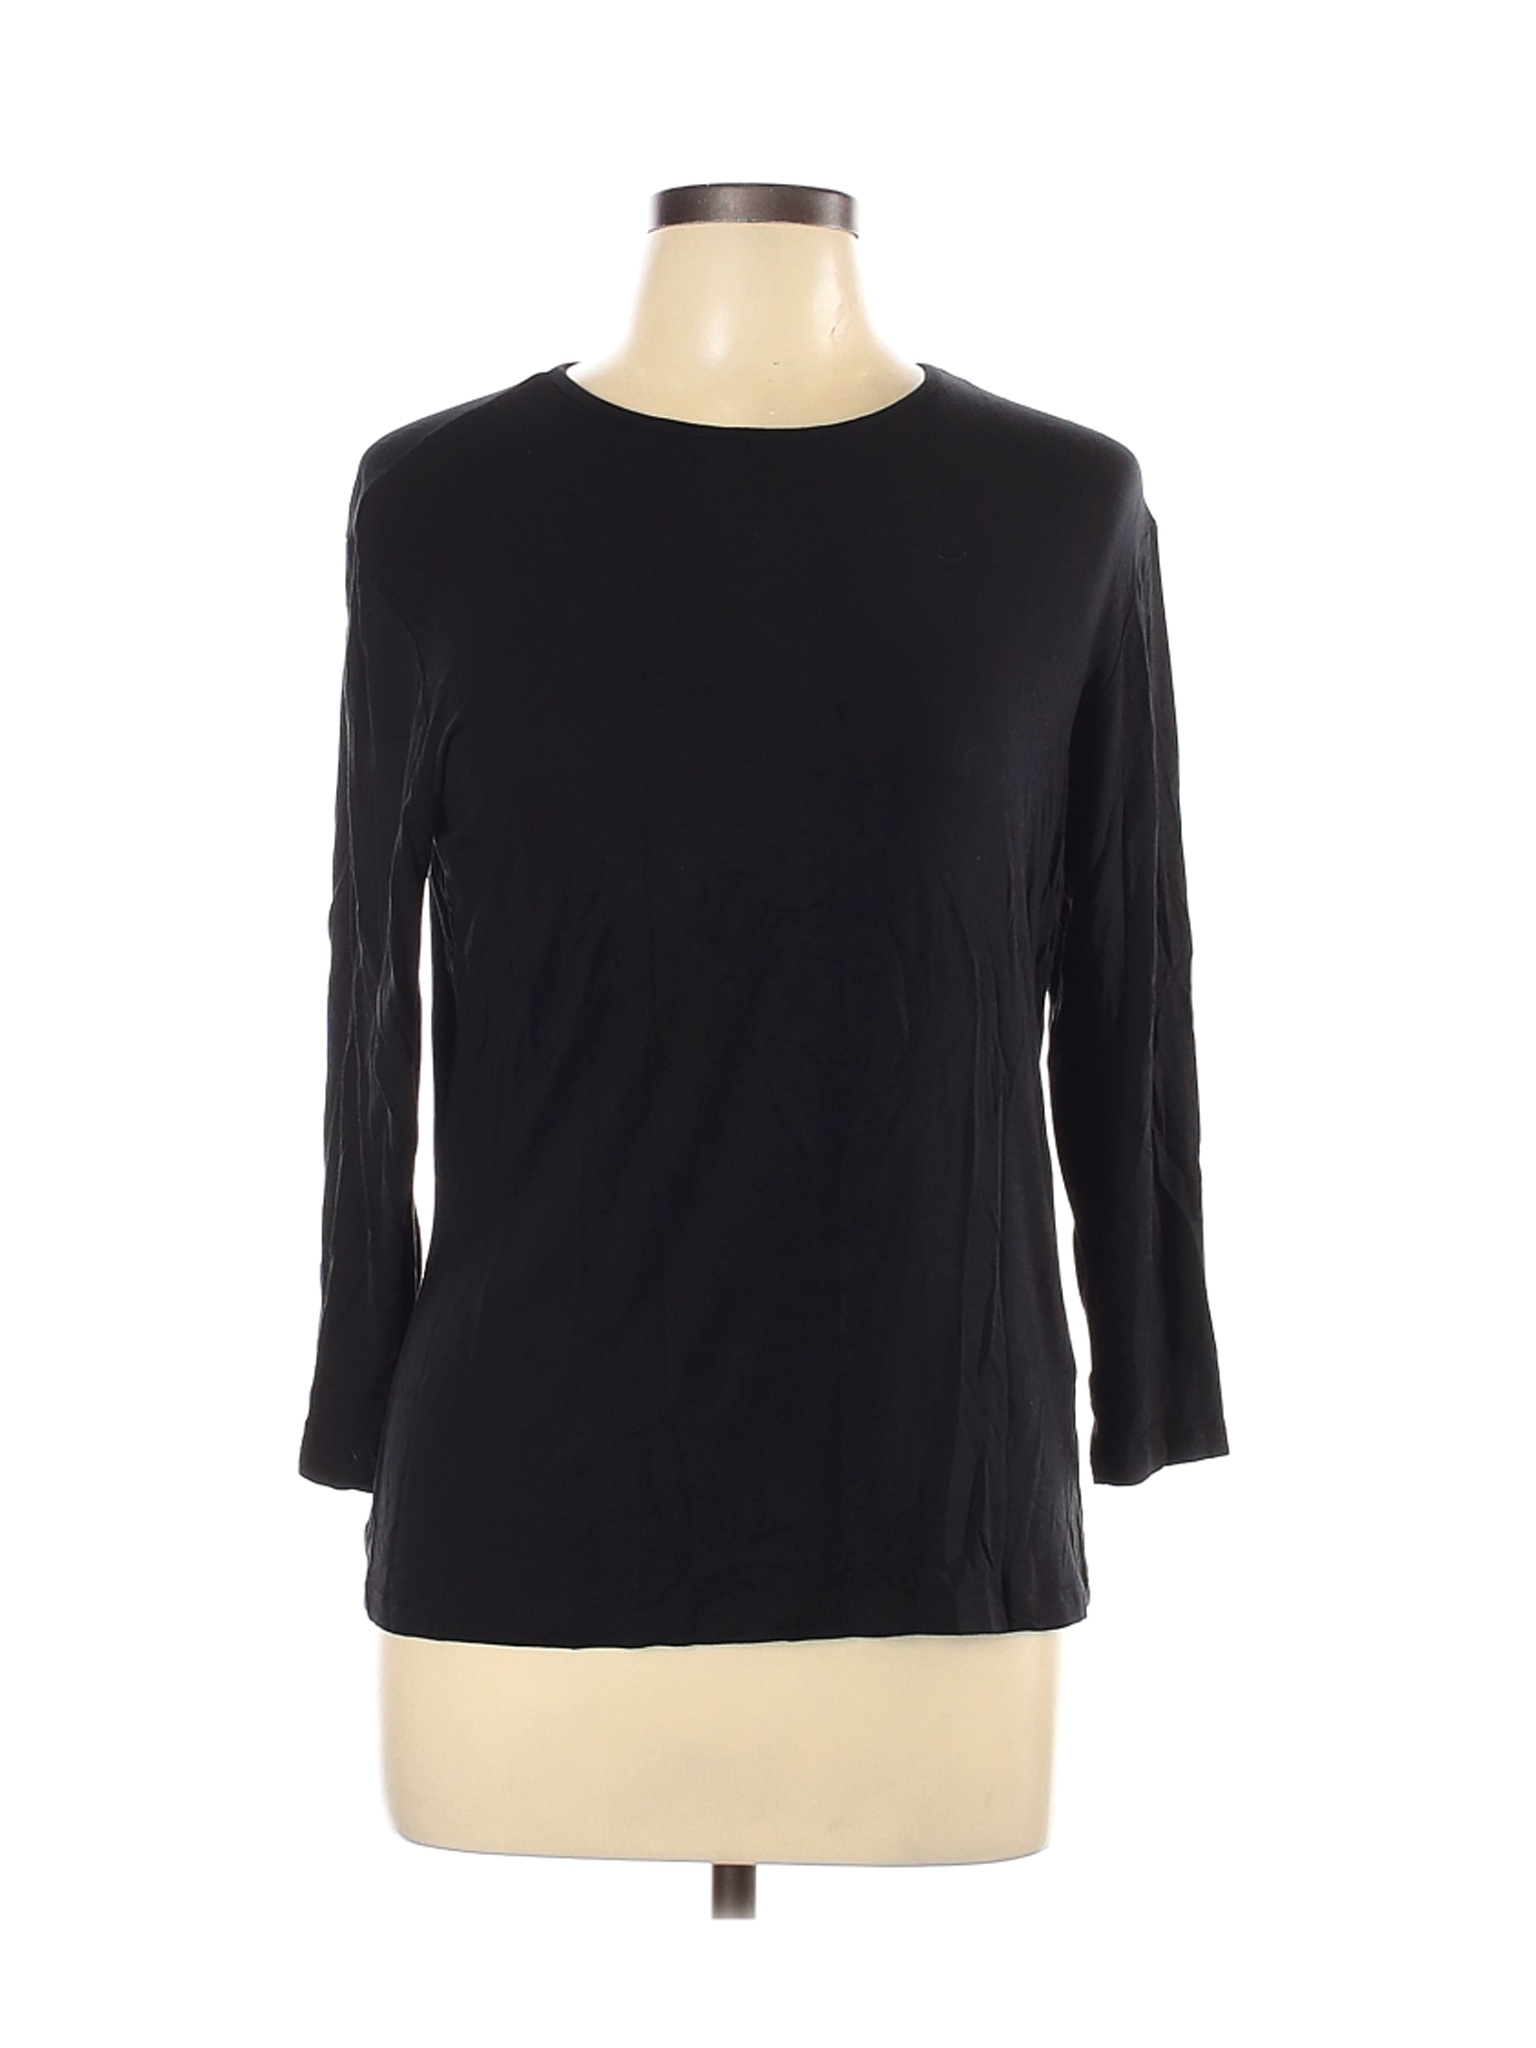 Paniz Women Black Long Sleeve T-Shirt XL | eBay